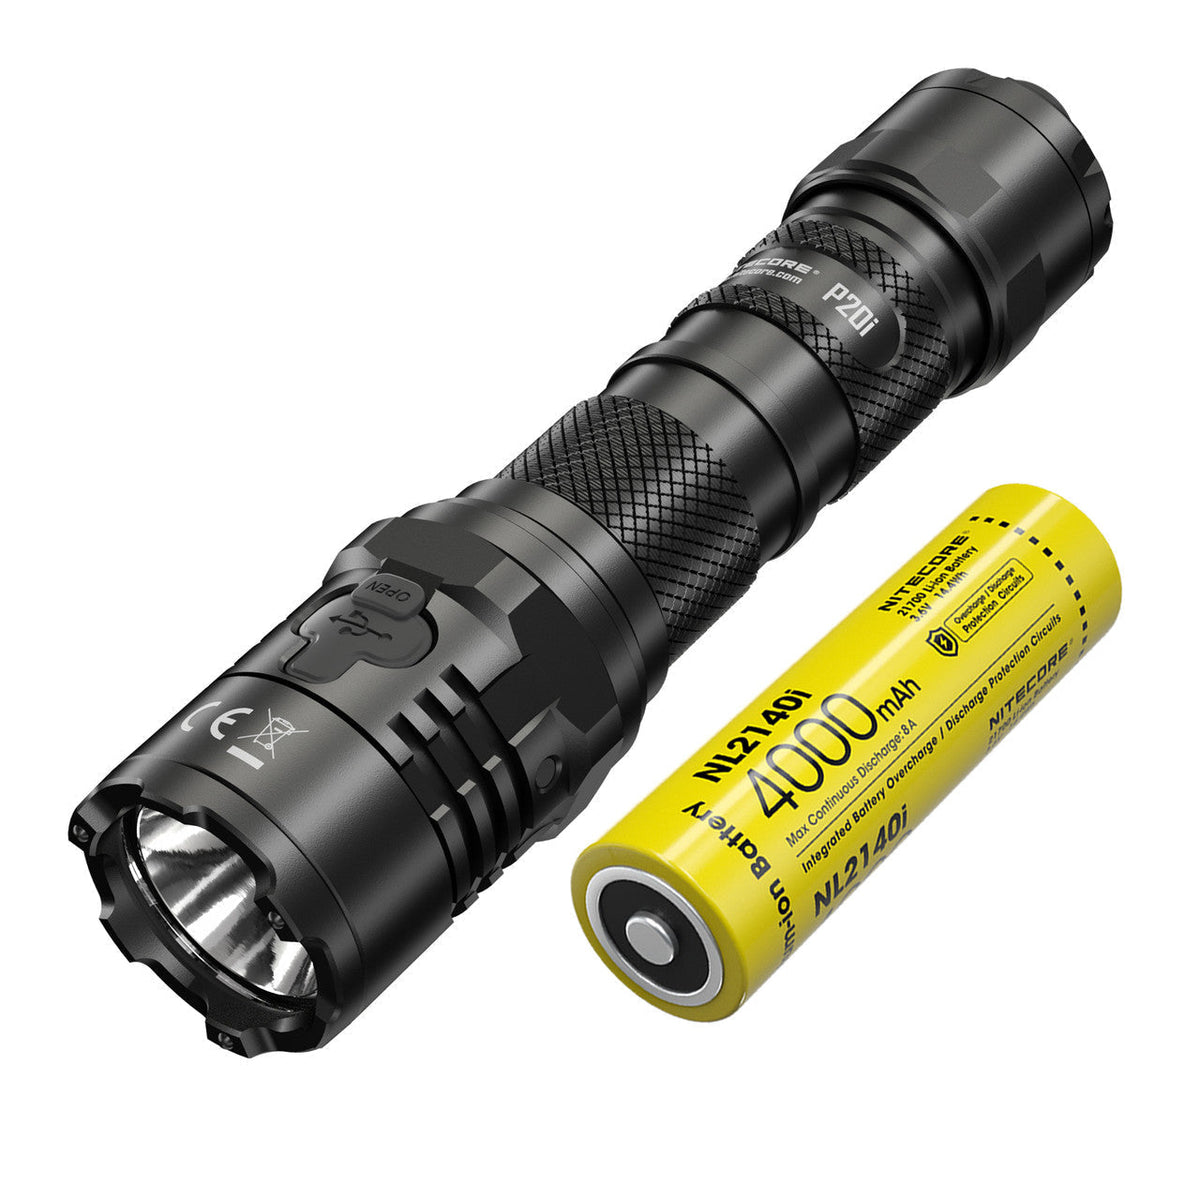 Flashlights & Headlamps - Nitecore P20i Tactical Flashlight (1800 Lumens | USB-C Rechargeable)